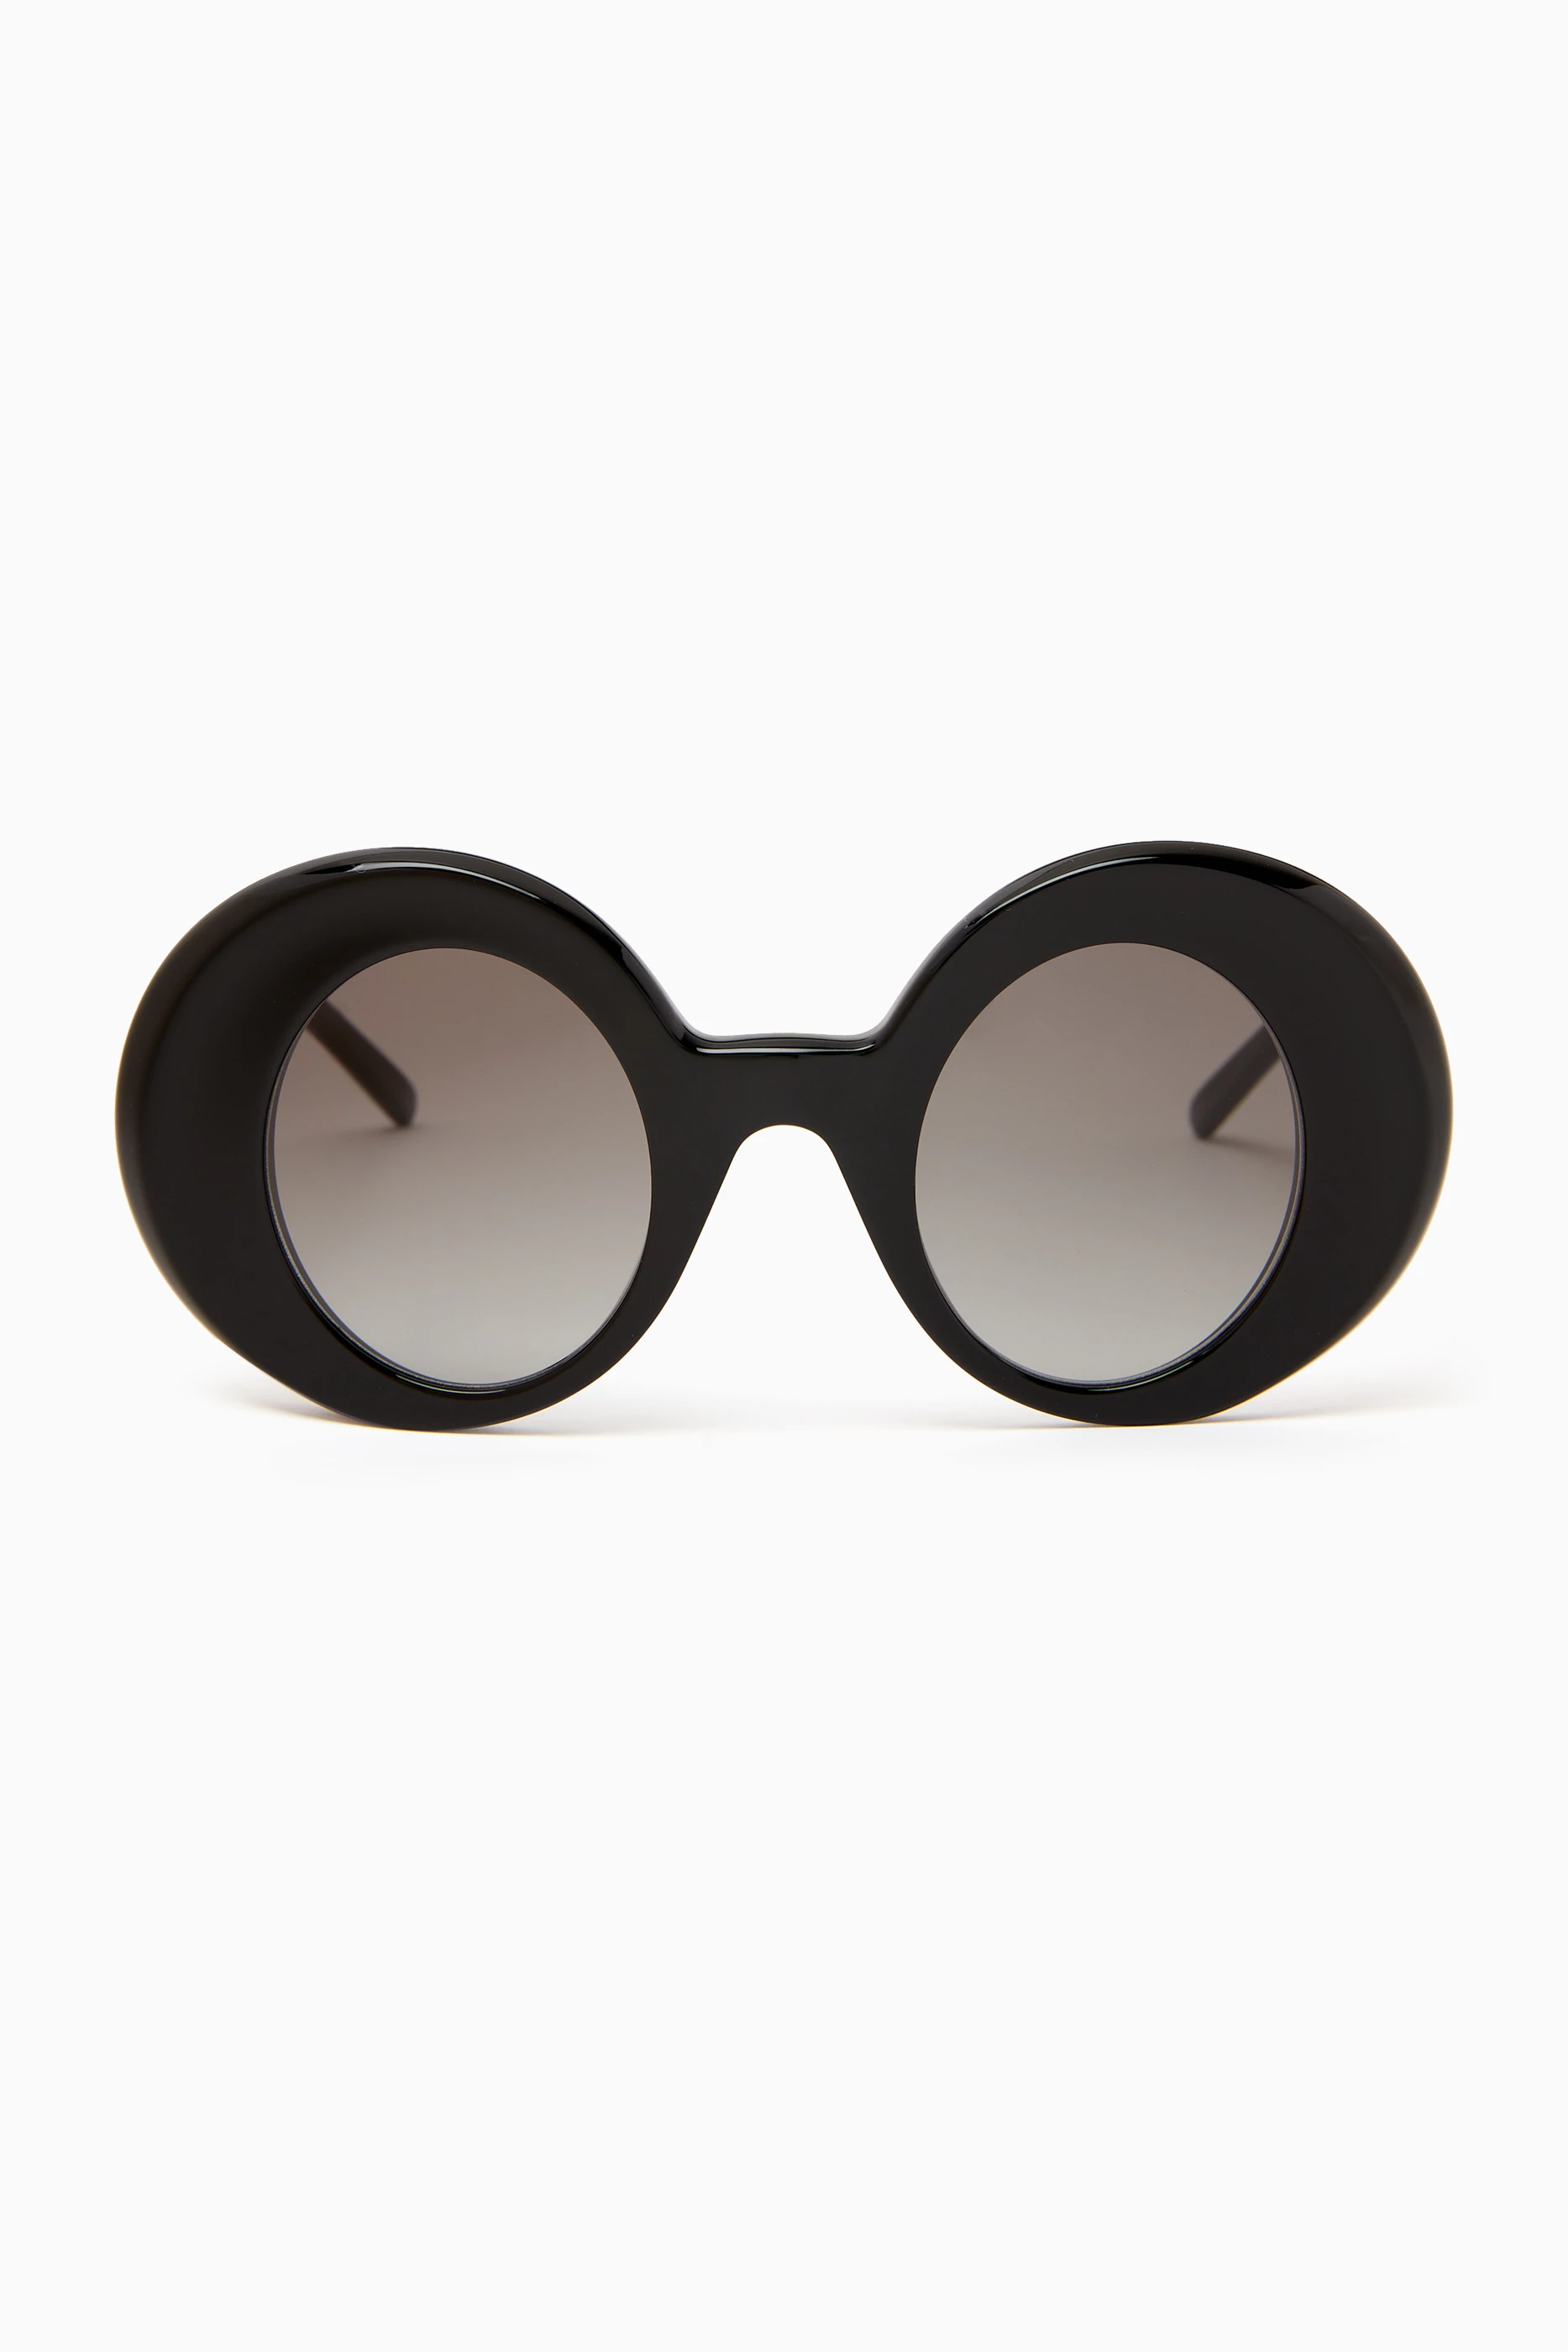 Oec Cpo Fashion Popular Rimless Rectangle Sunglasses Women Men Shades Alloy  Glasses Uv400 O264 - Sunglasses - AliExpress